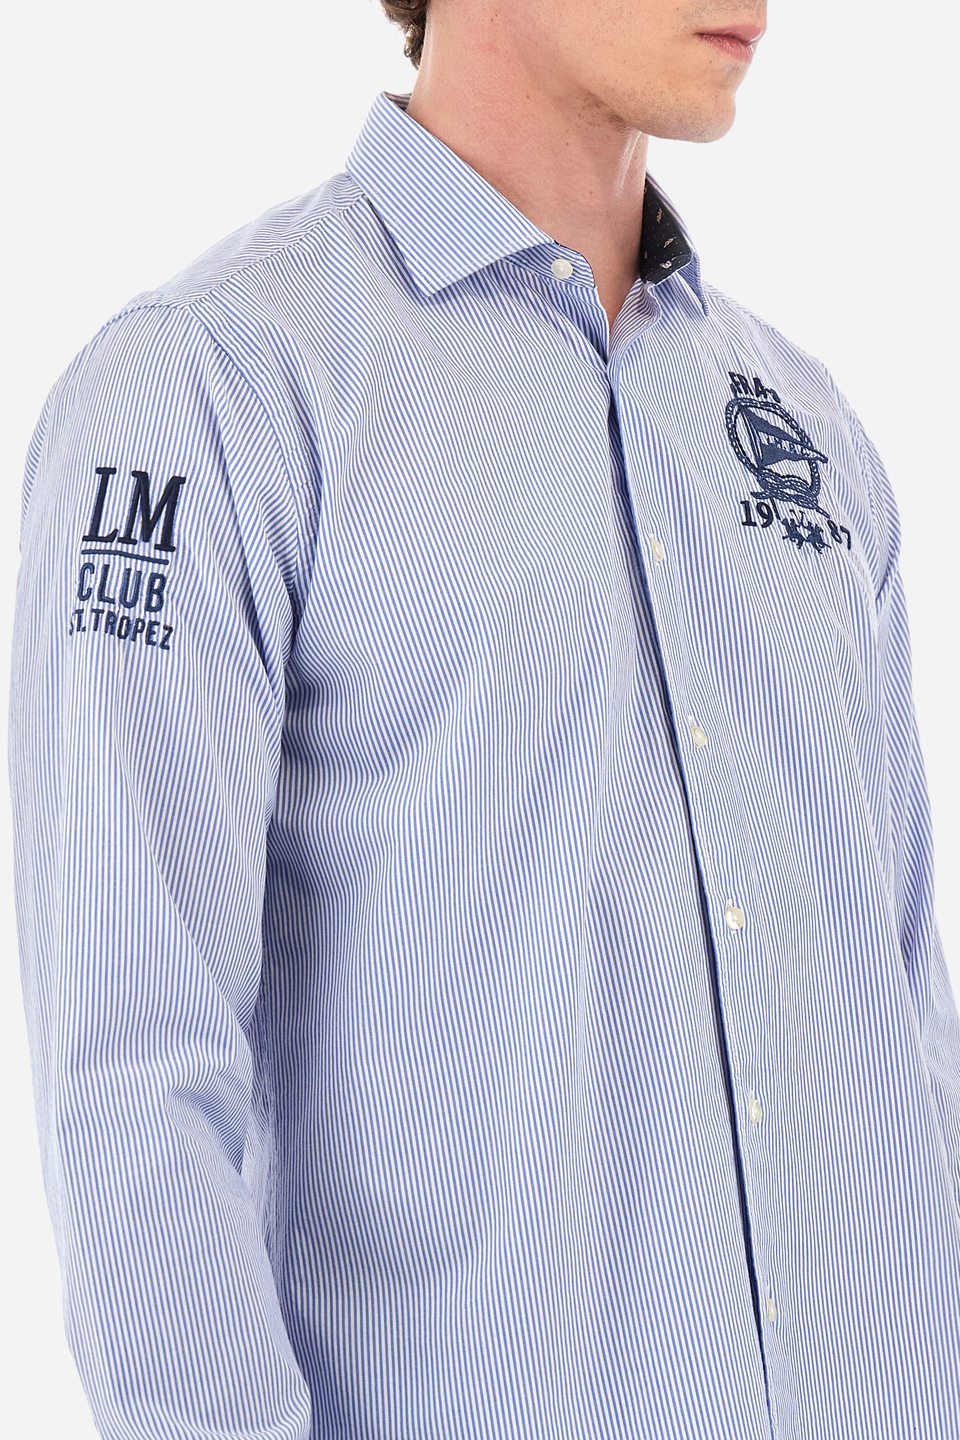 Poplin shirt with a striped pattern - Innocent | La Martina - Official Online Shop